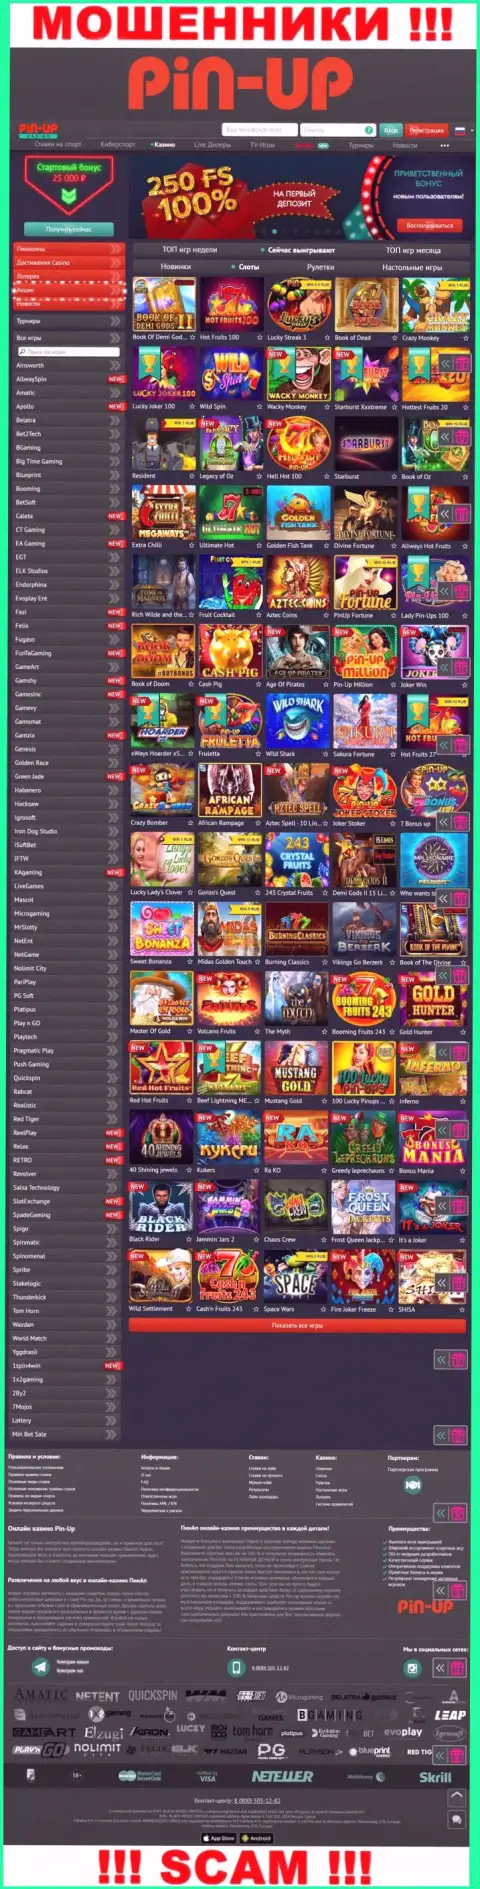 Pin-Up Casino - это официальный онлайн-ресурс internet-ворюг Pin-Up Casino